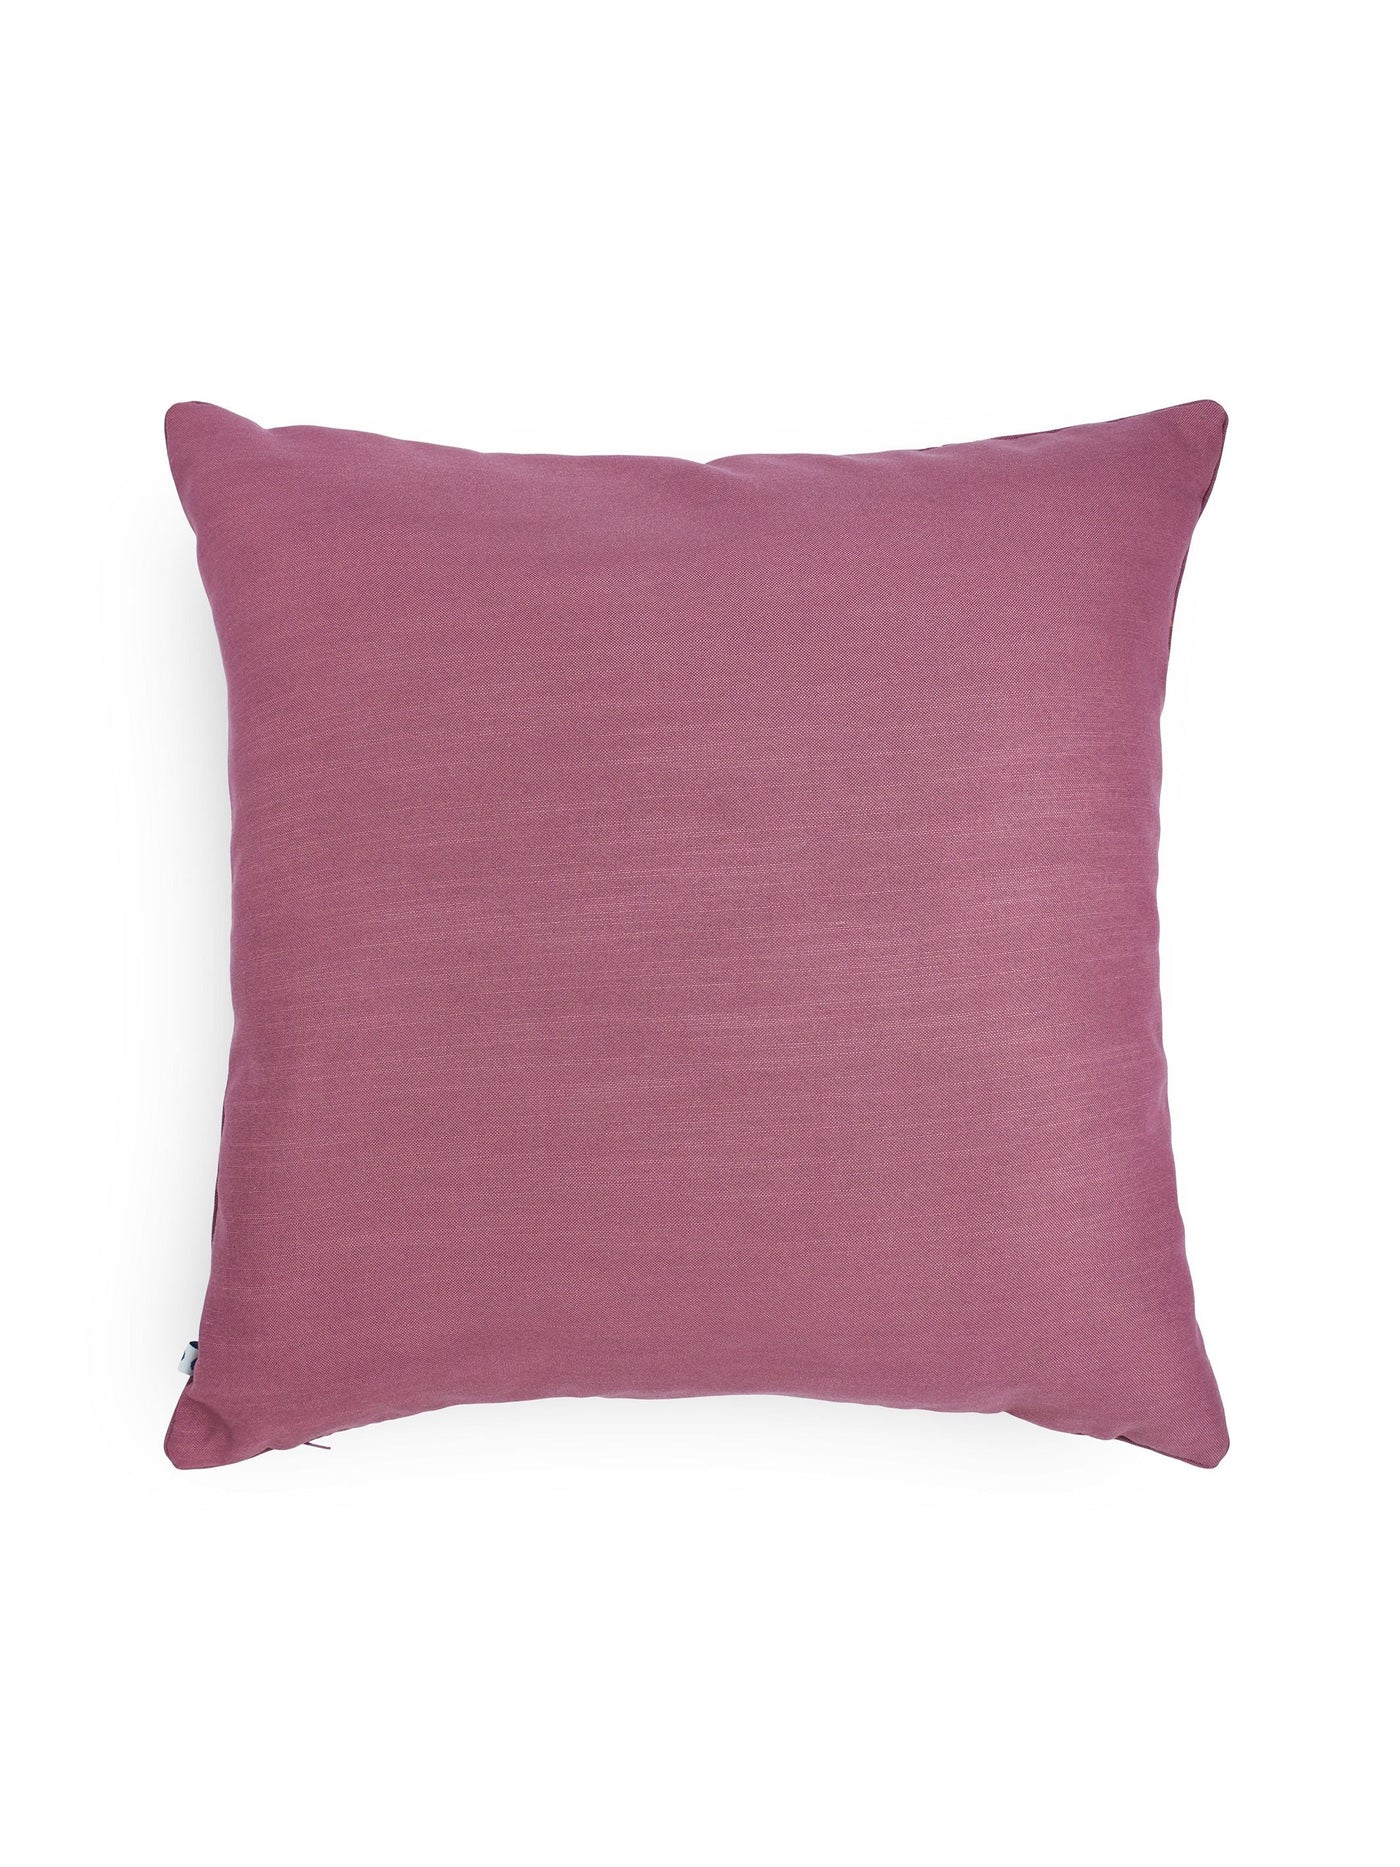 Hand Painted Cushion Cover - Wilderness Fuchsia